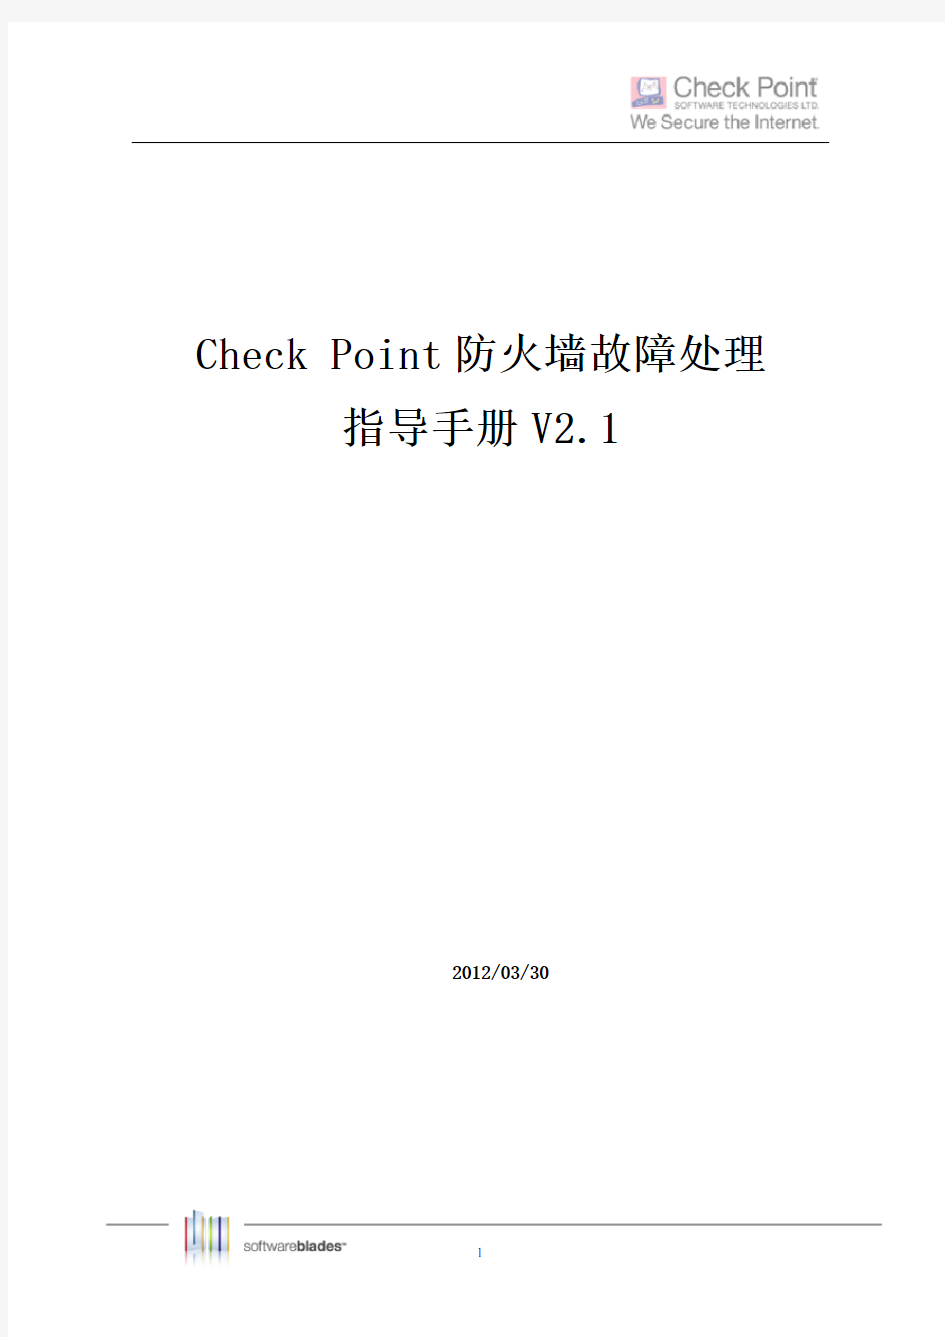 Check+Point防火墙设备故障处理指导手册+V2.0